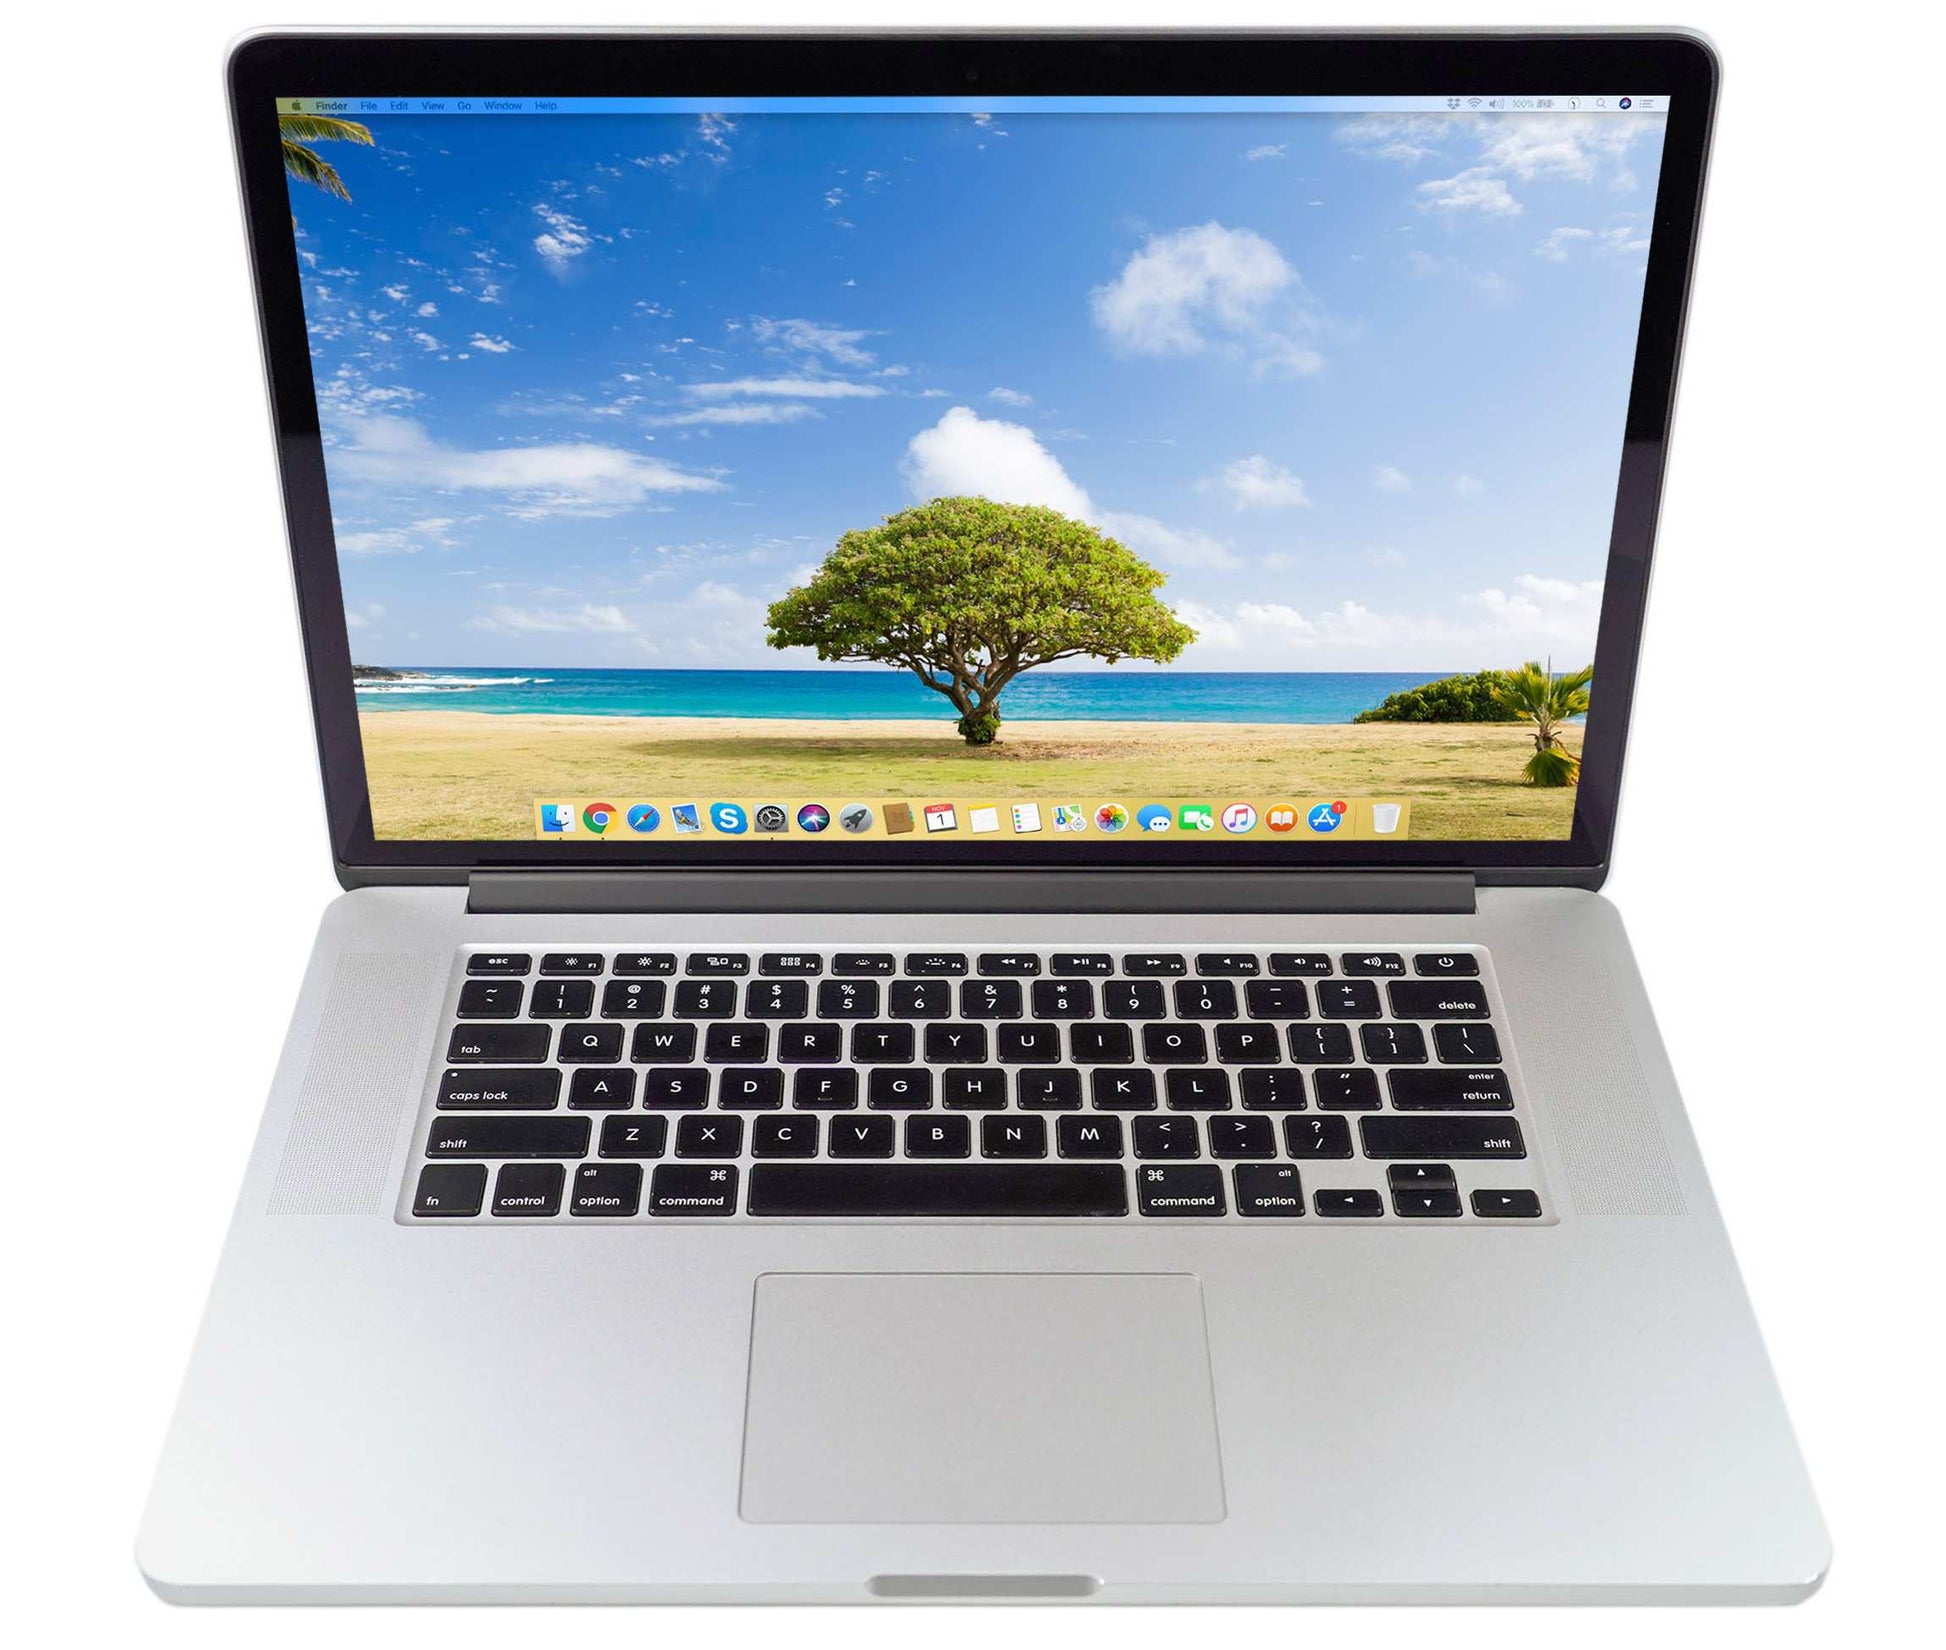 Apple MacBook Pro (15-inch Mid 2012) 2.7 GHz I7-3820QM 8GB 512GB SSD (Silver)